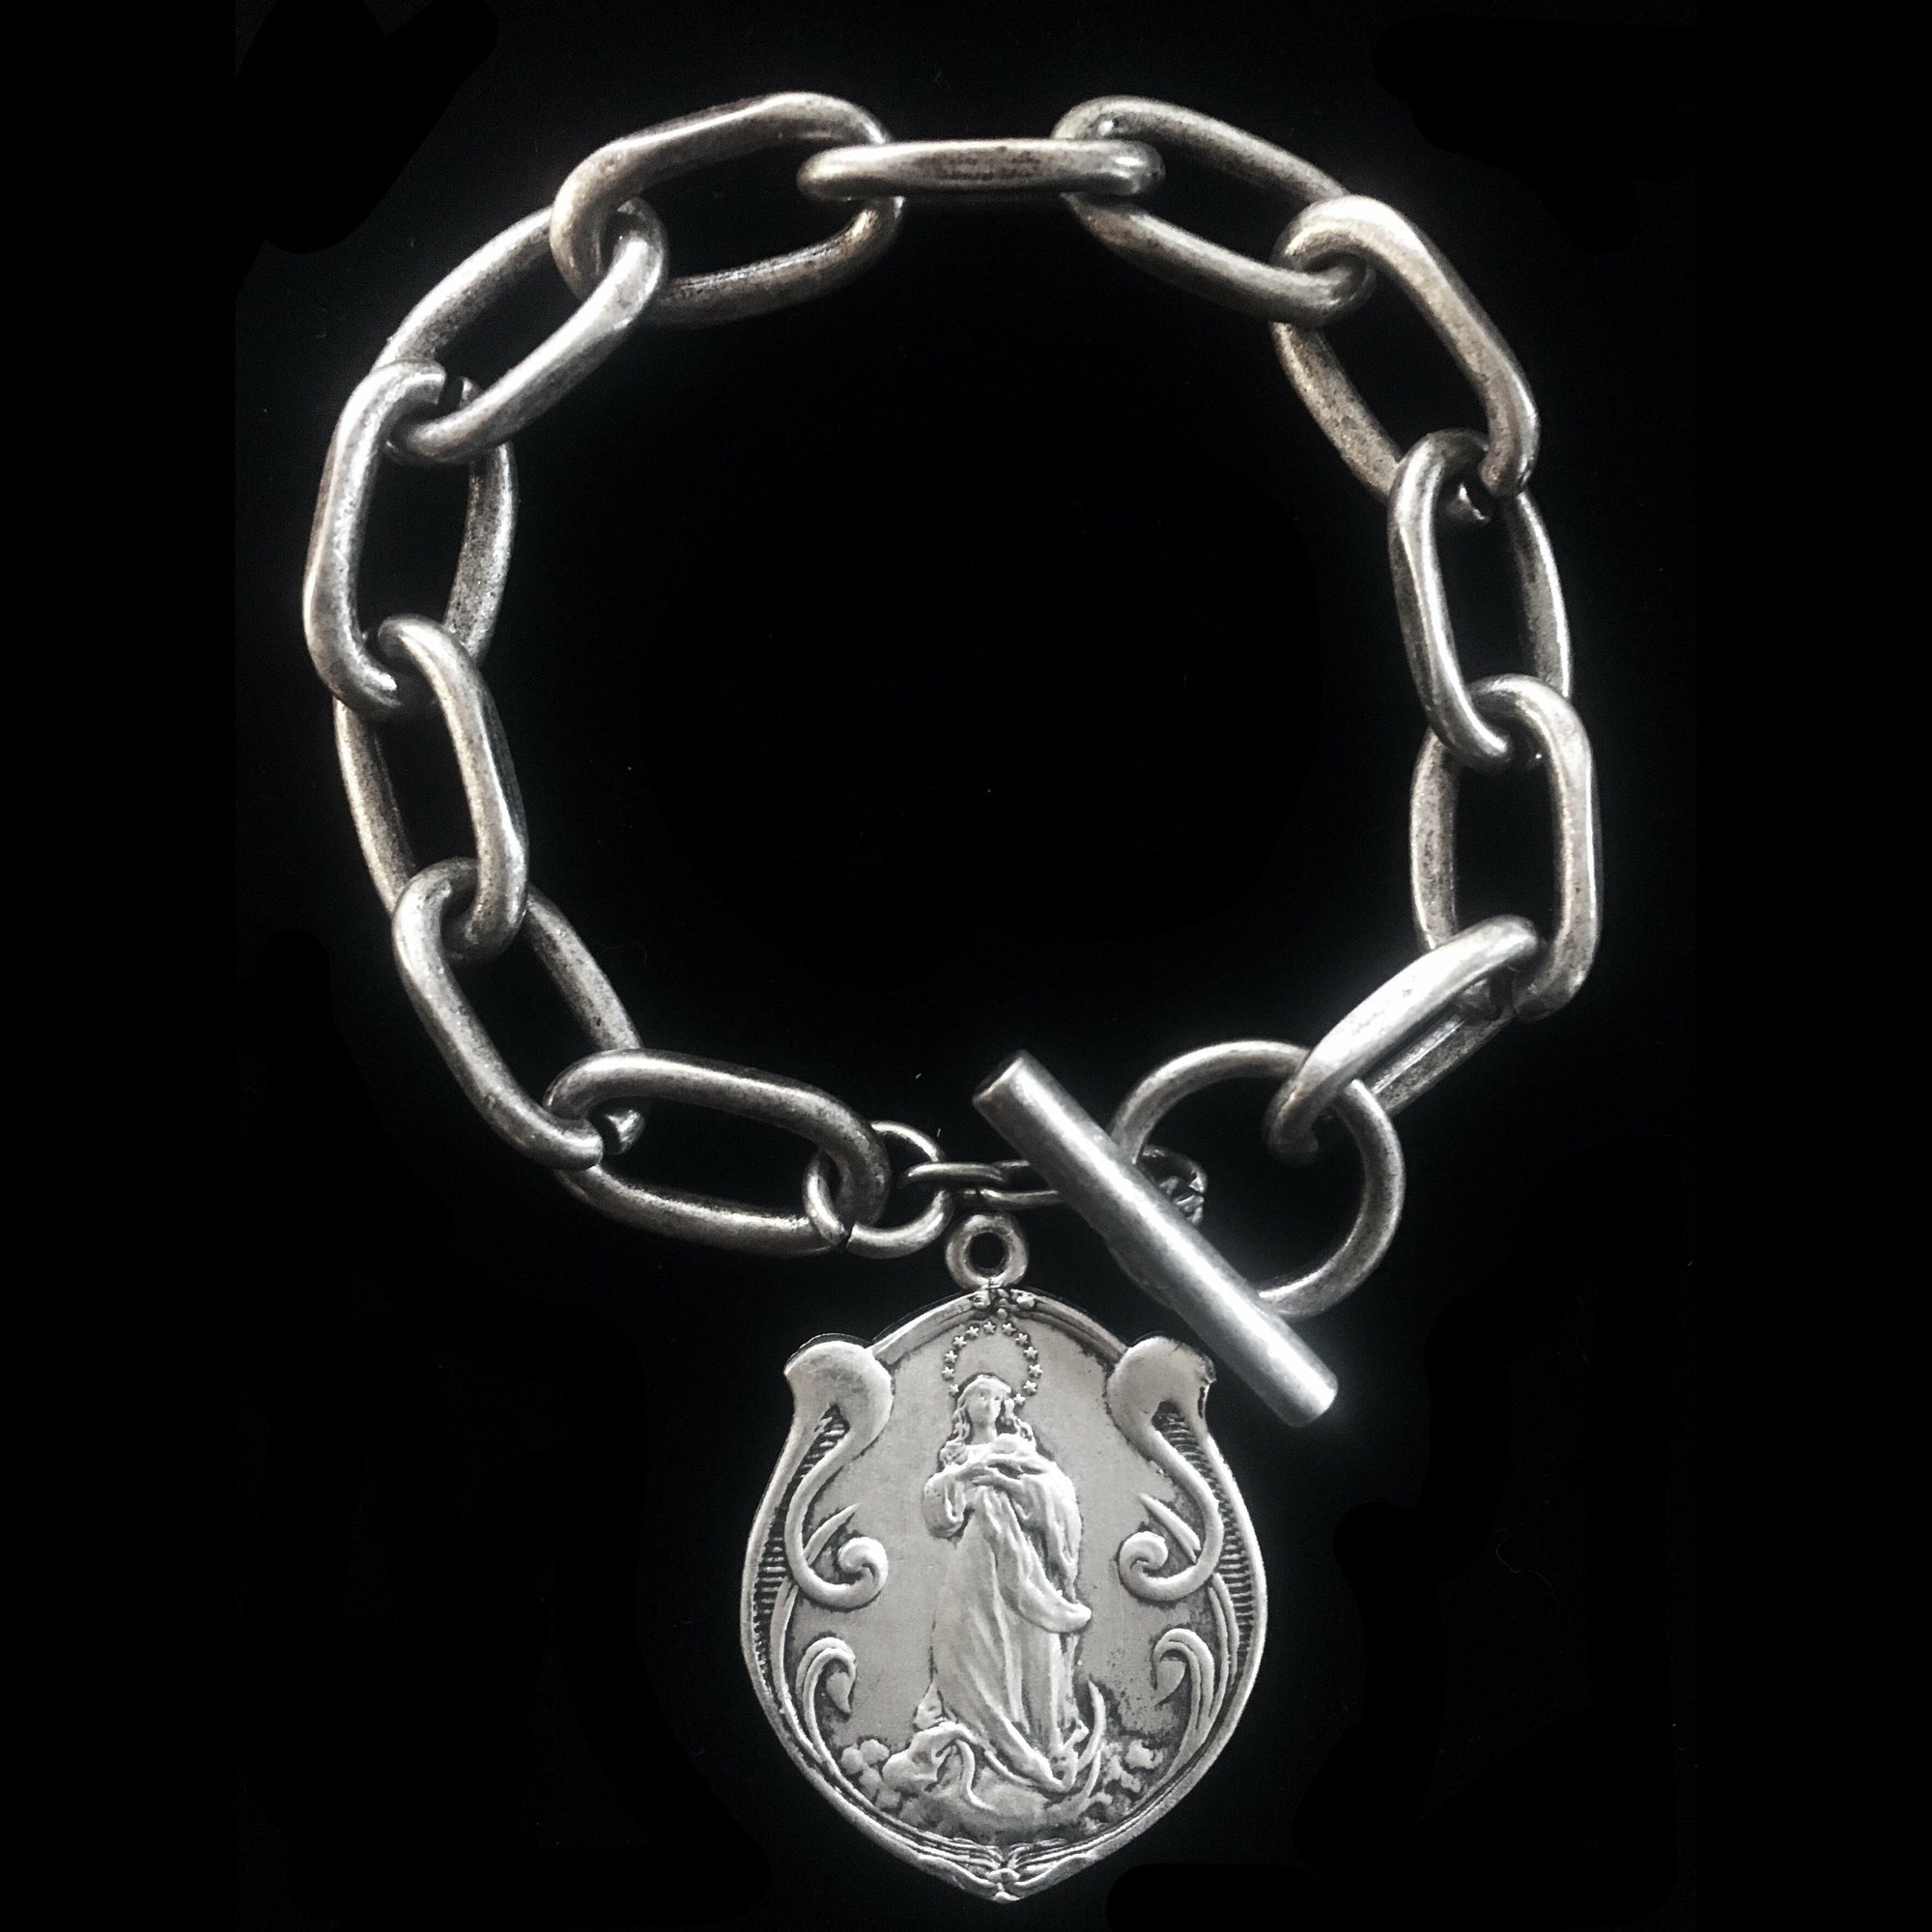 Assumption Art Nouveau Madonna Link Bracelet by Whispering Goddess - Silver